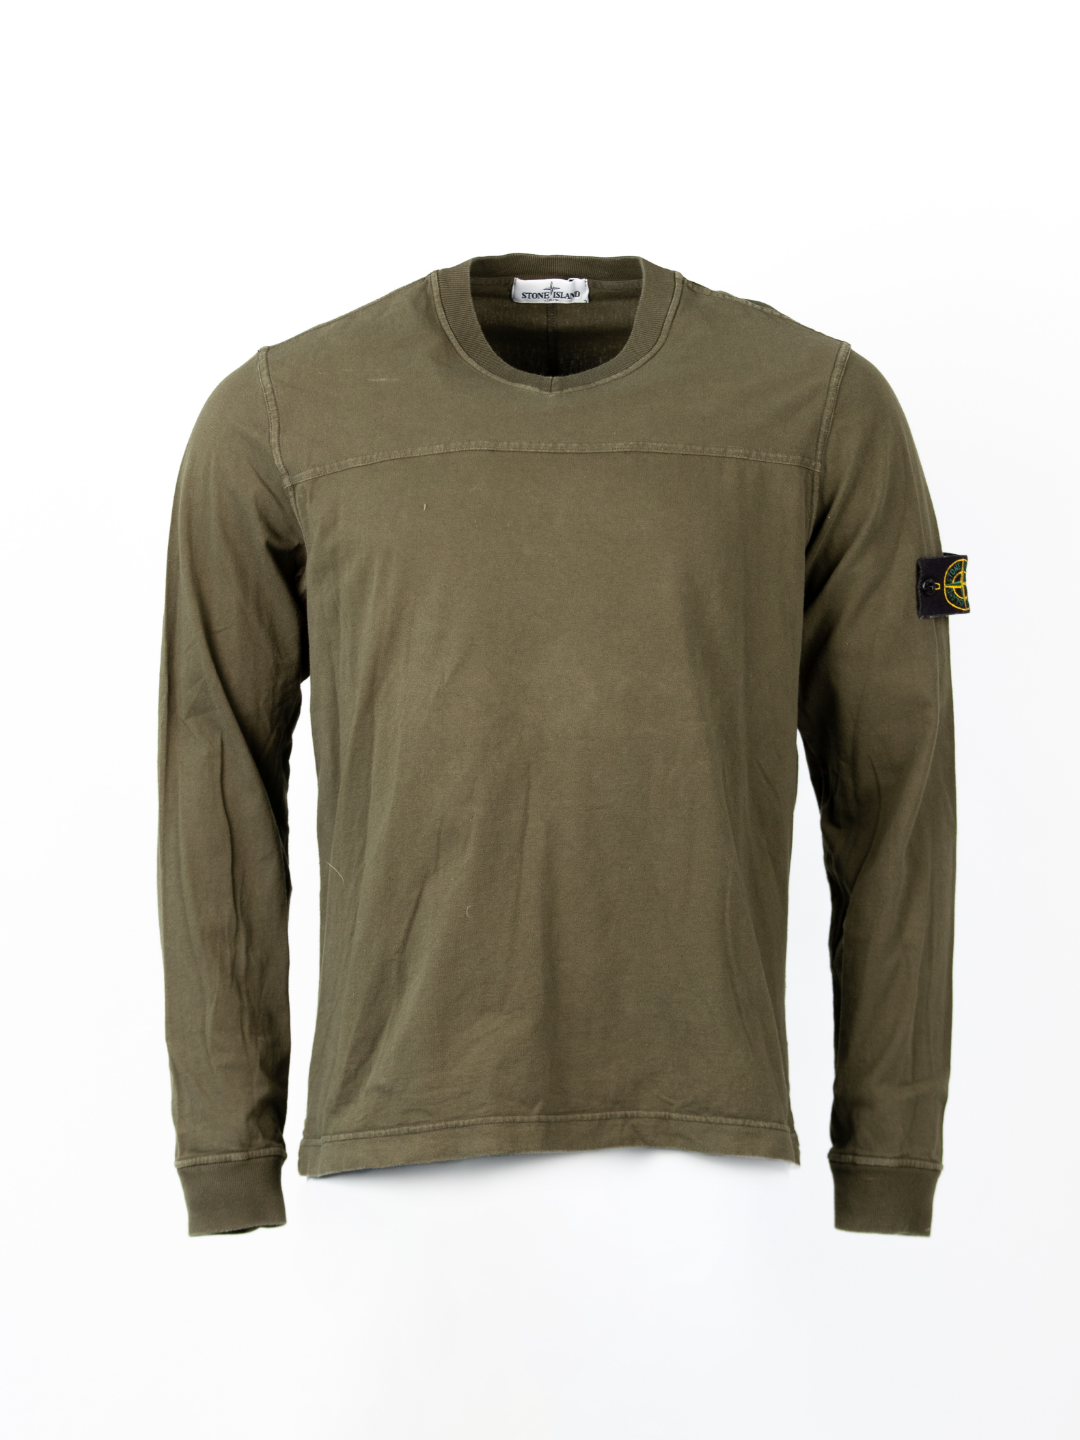 Army Green Sweatshirt